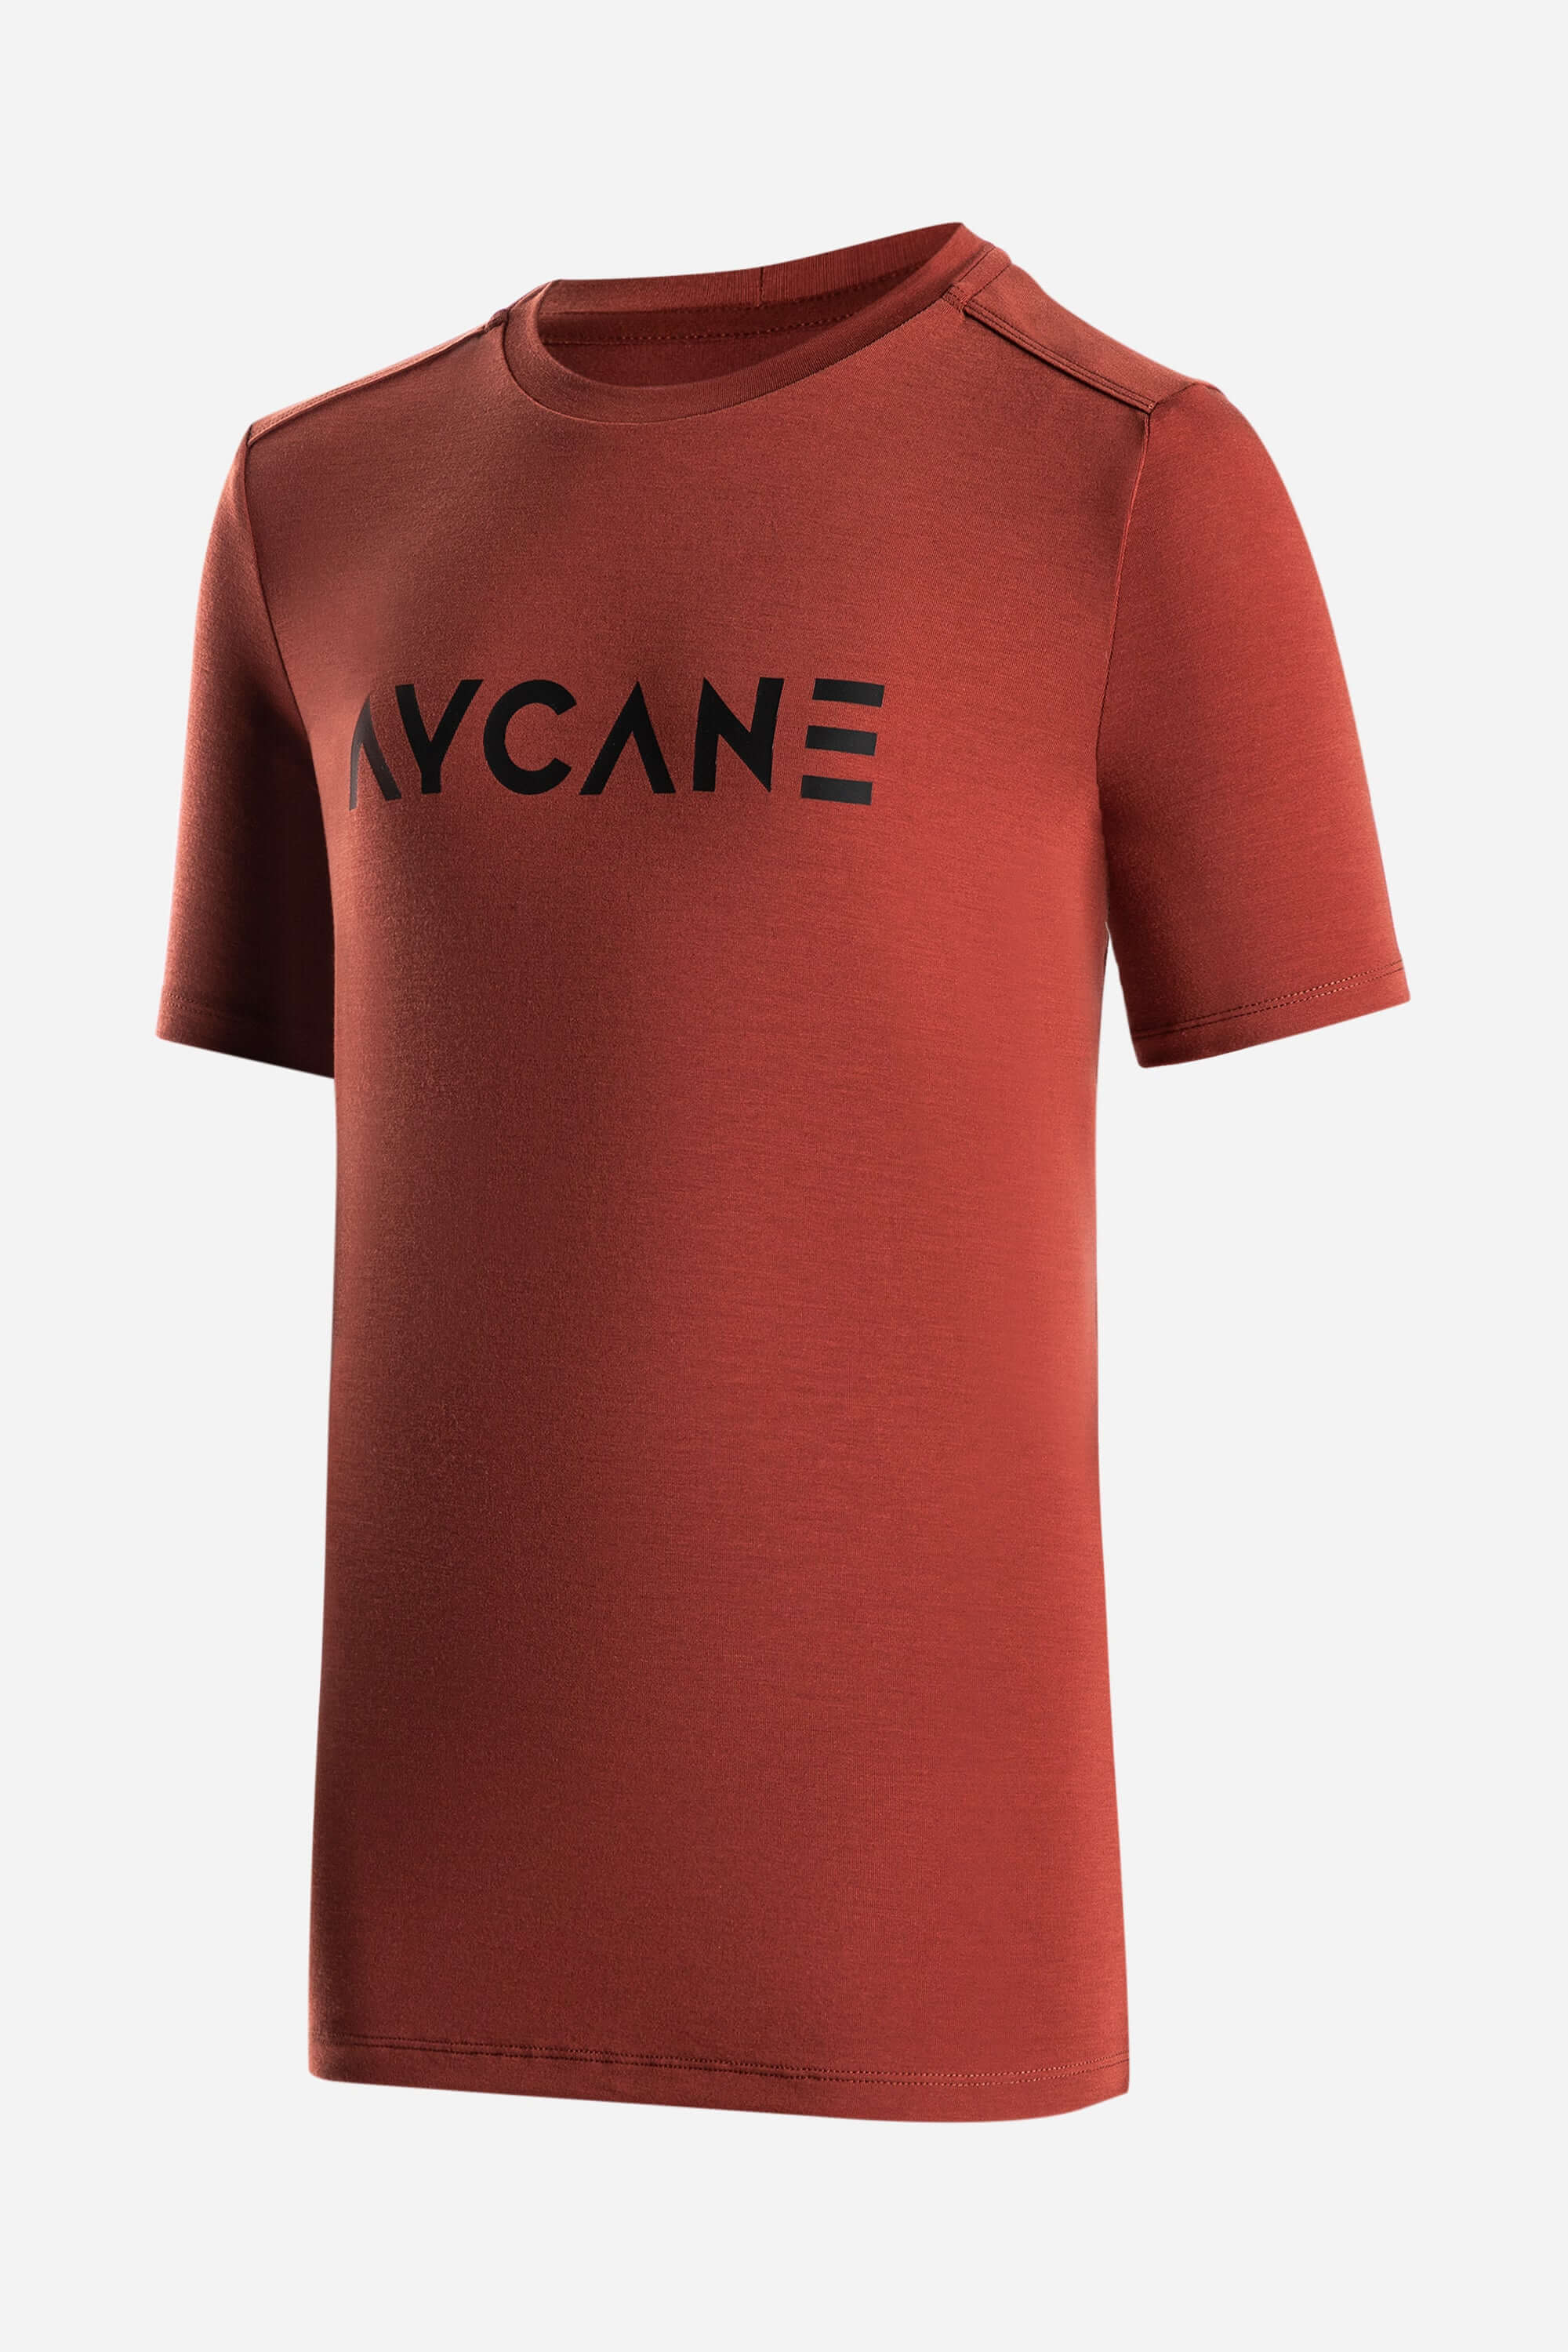 Youth red AYCANE t-shirt short sleeve with big black logo on chest